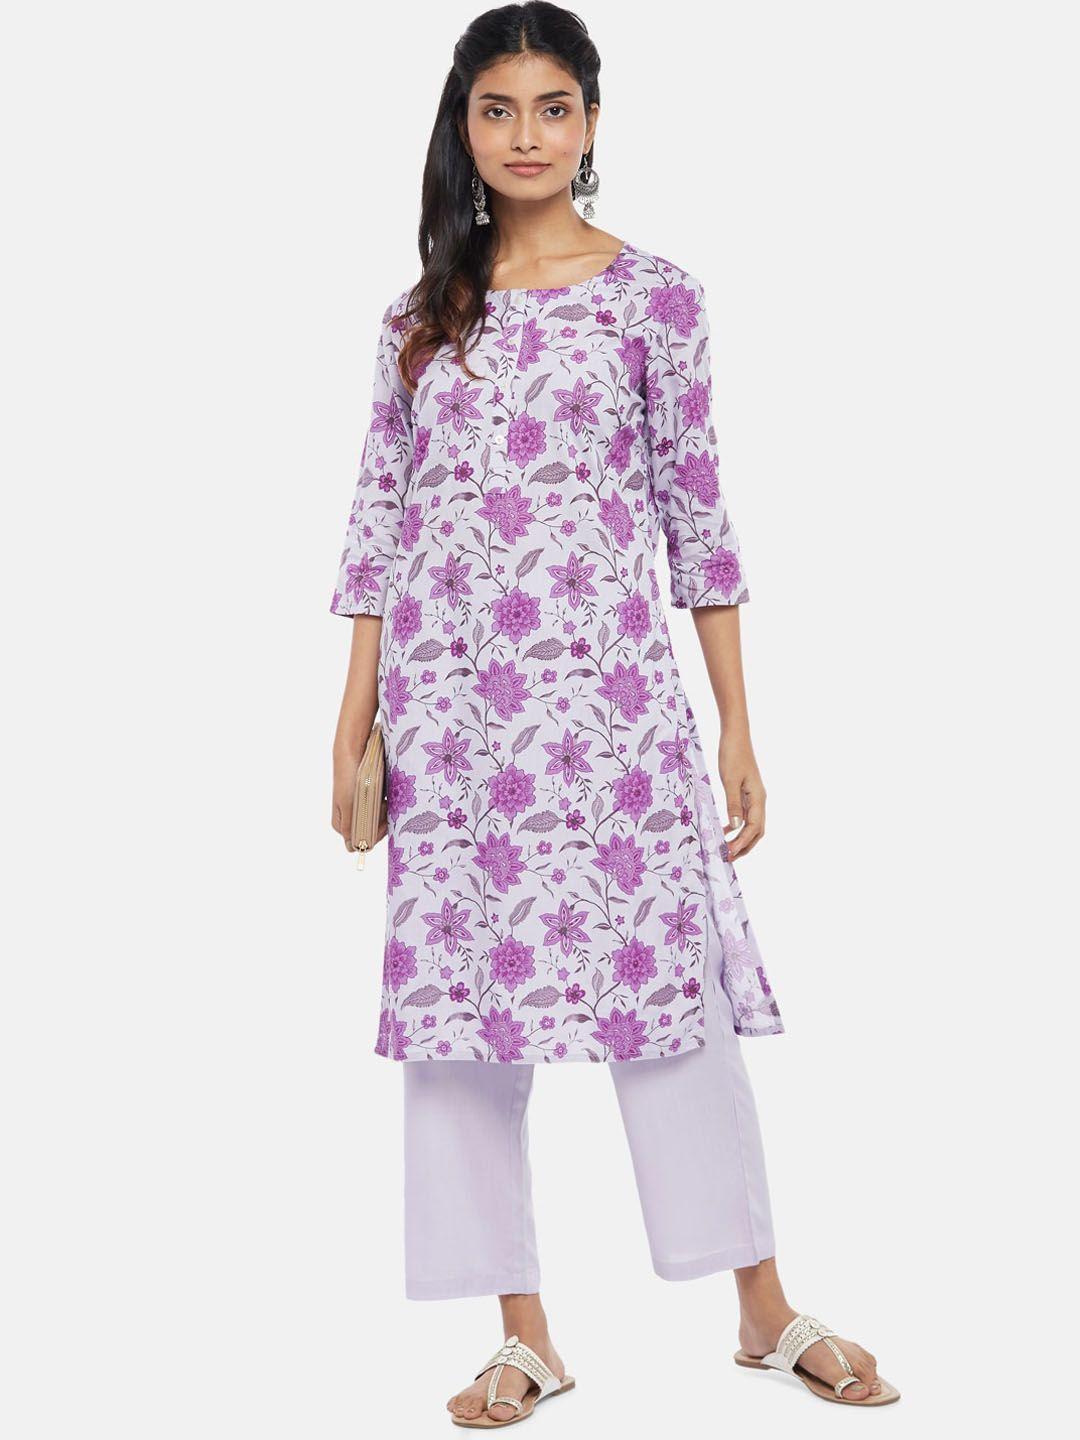 rangmanch by pantaloons women floral printed kurta with pyjama set